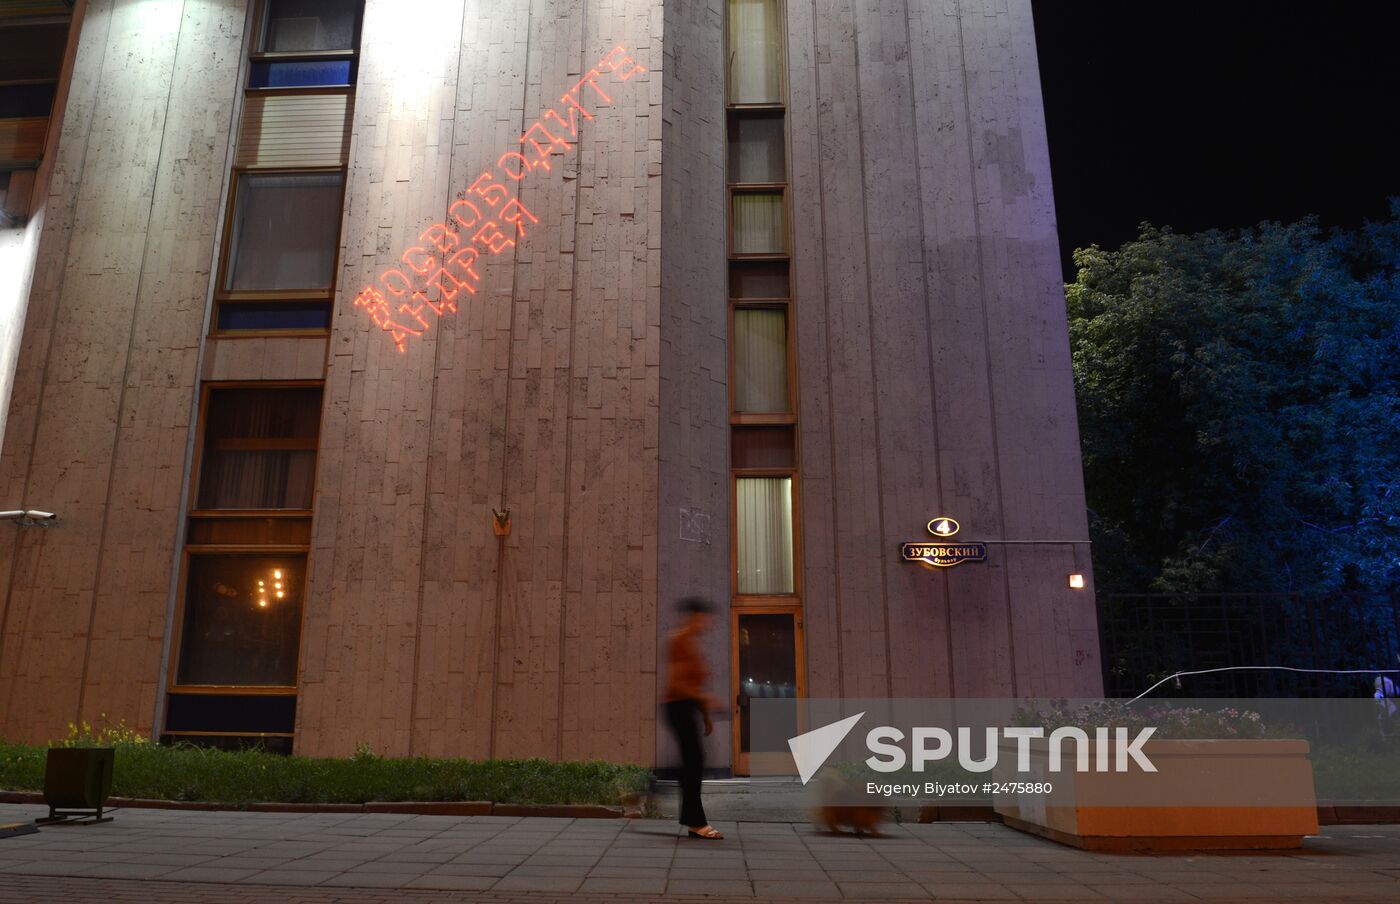 Hashtags in support of Andrei Stenin projected on Rossiya Segodnya building